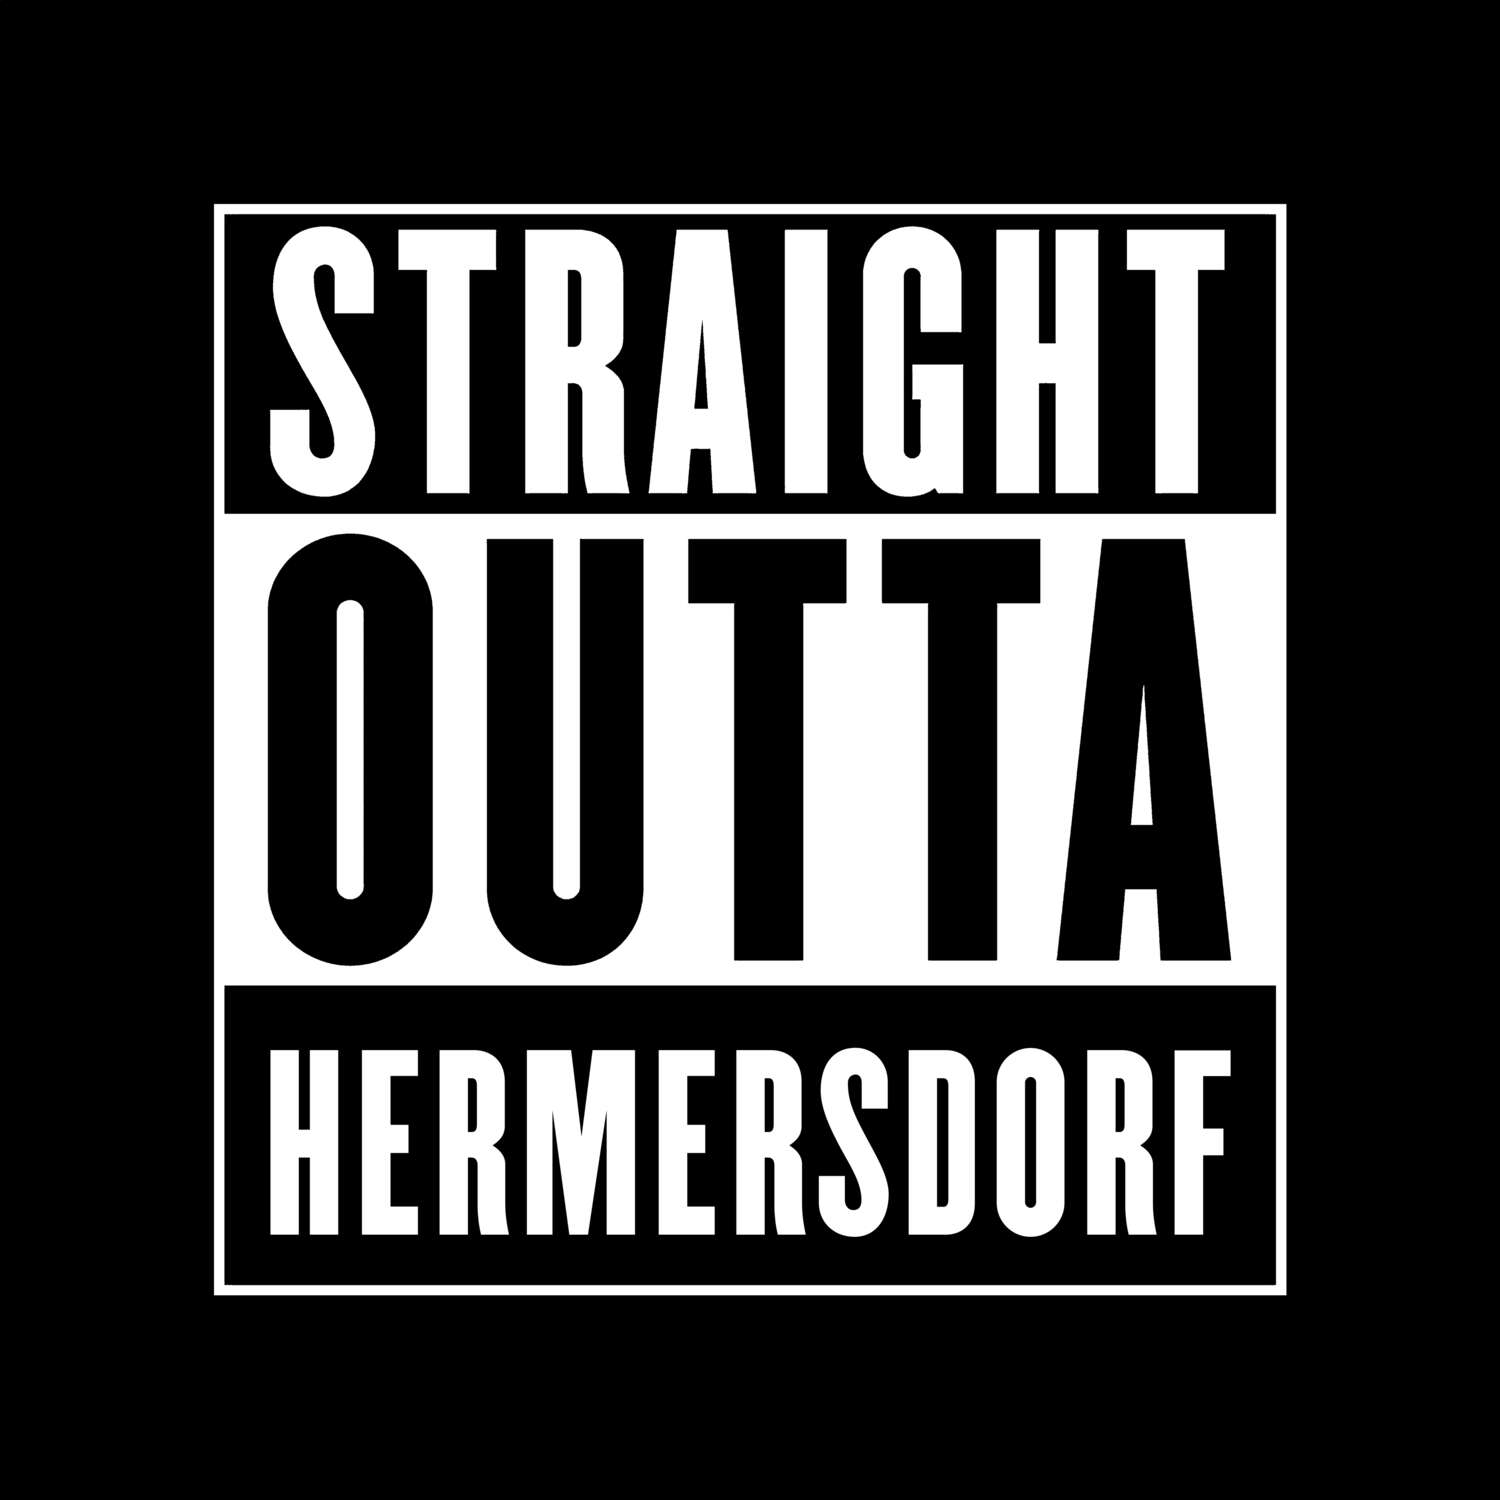 Hermersdorf T-Shirt »Straight Outta«